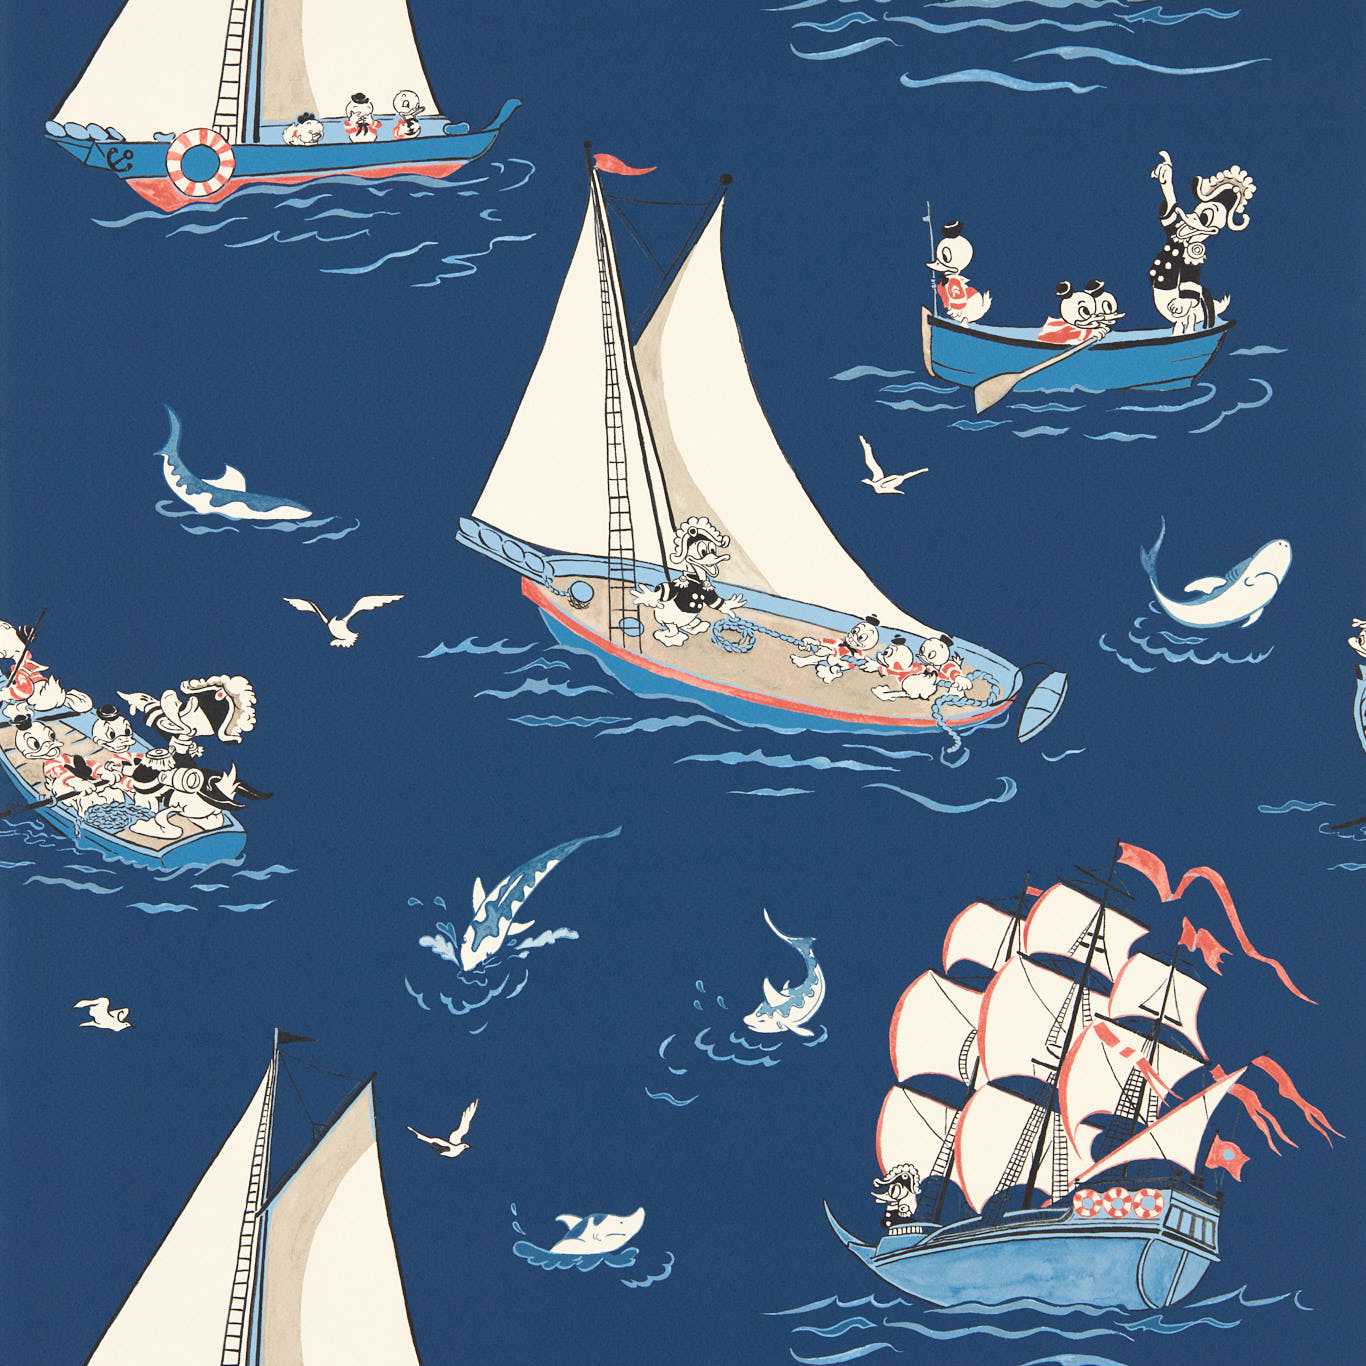 Donald Nautical Night Fishing Wallpaper by SAN